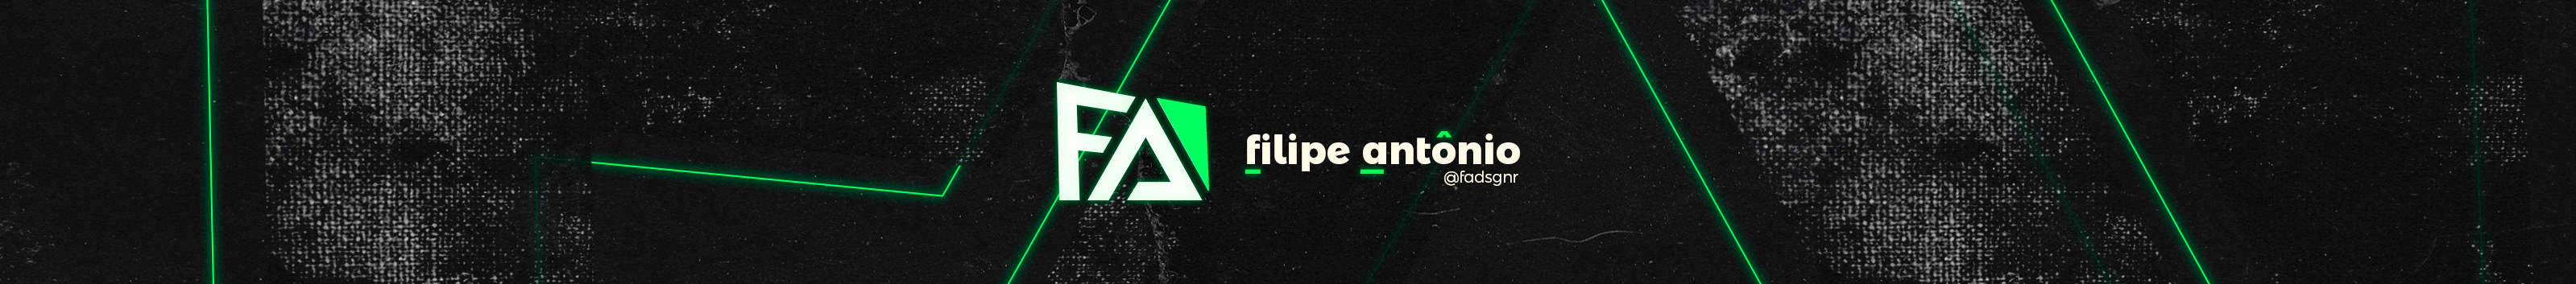 Banner de perfil de Filipe Antônio